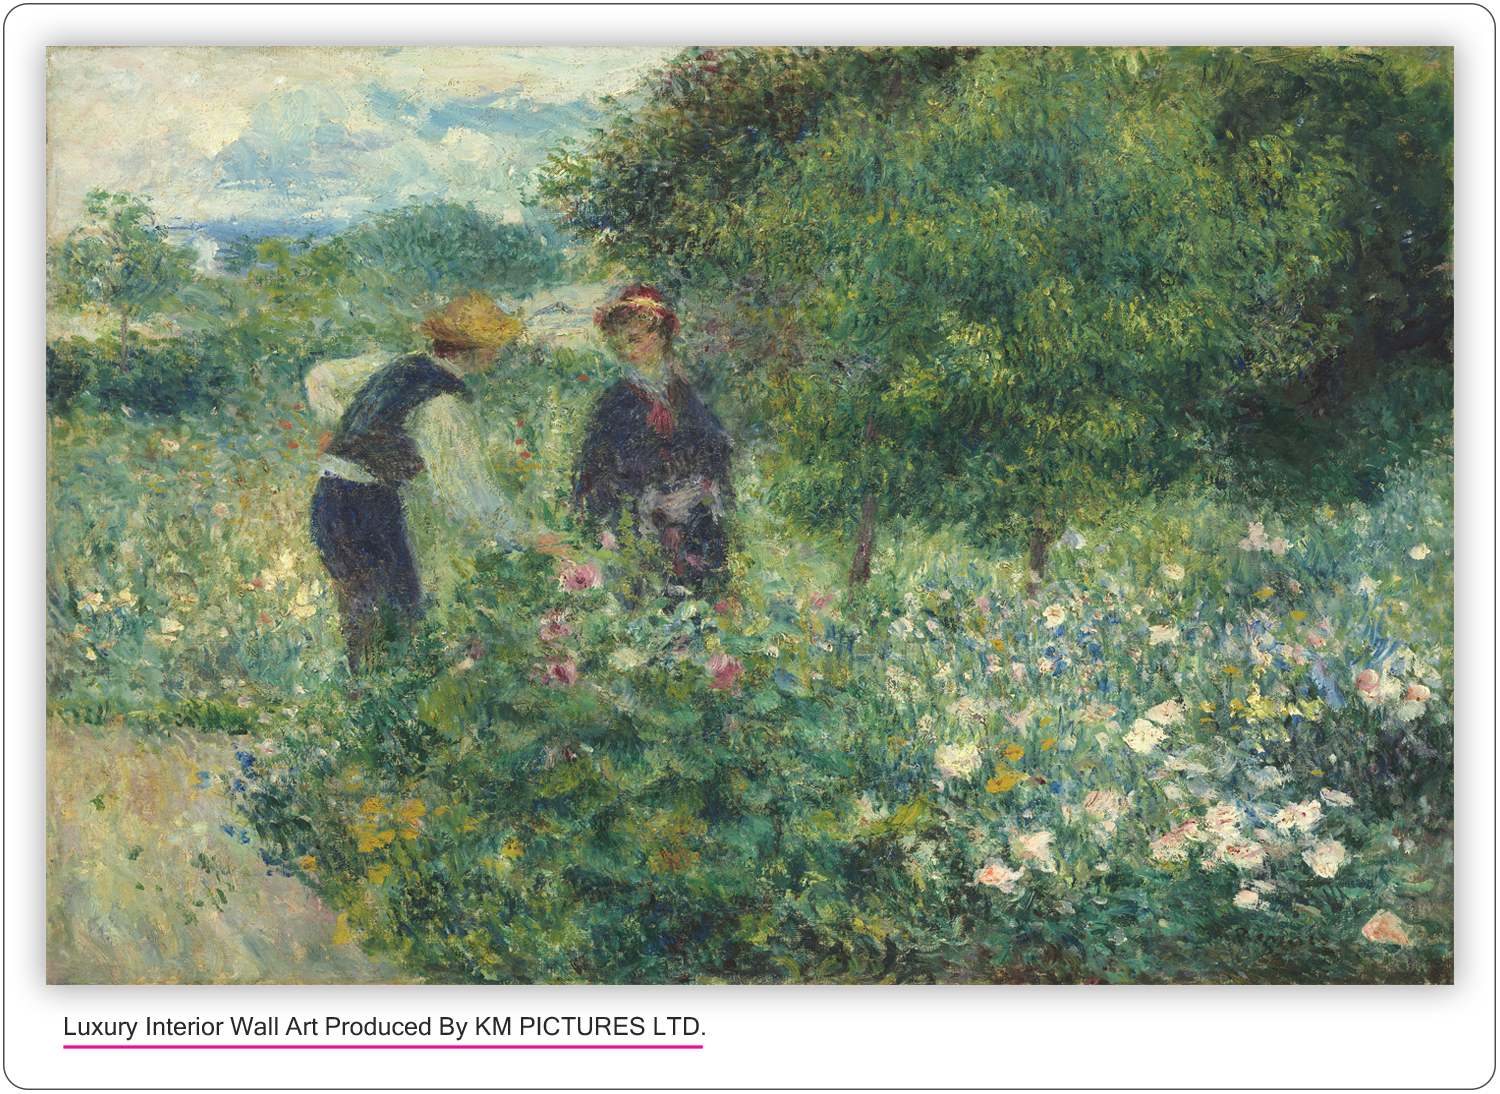 Picking Flowers, 1875